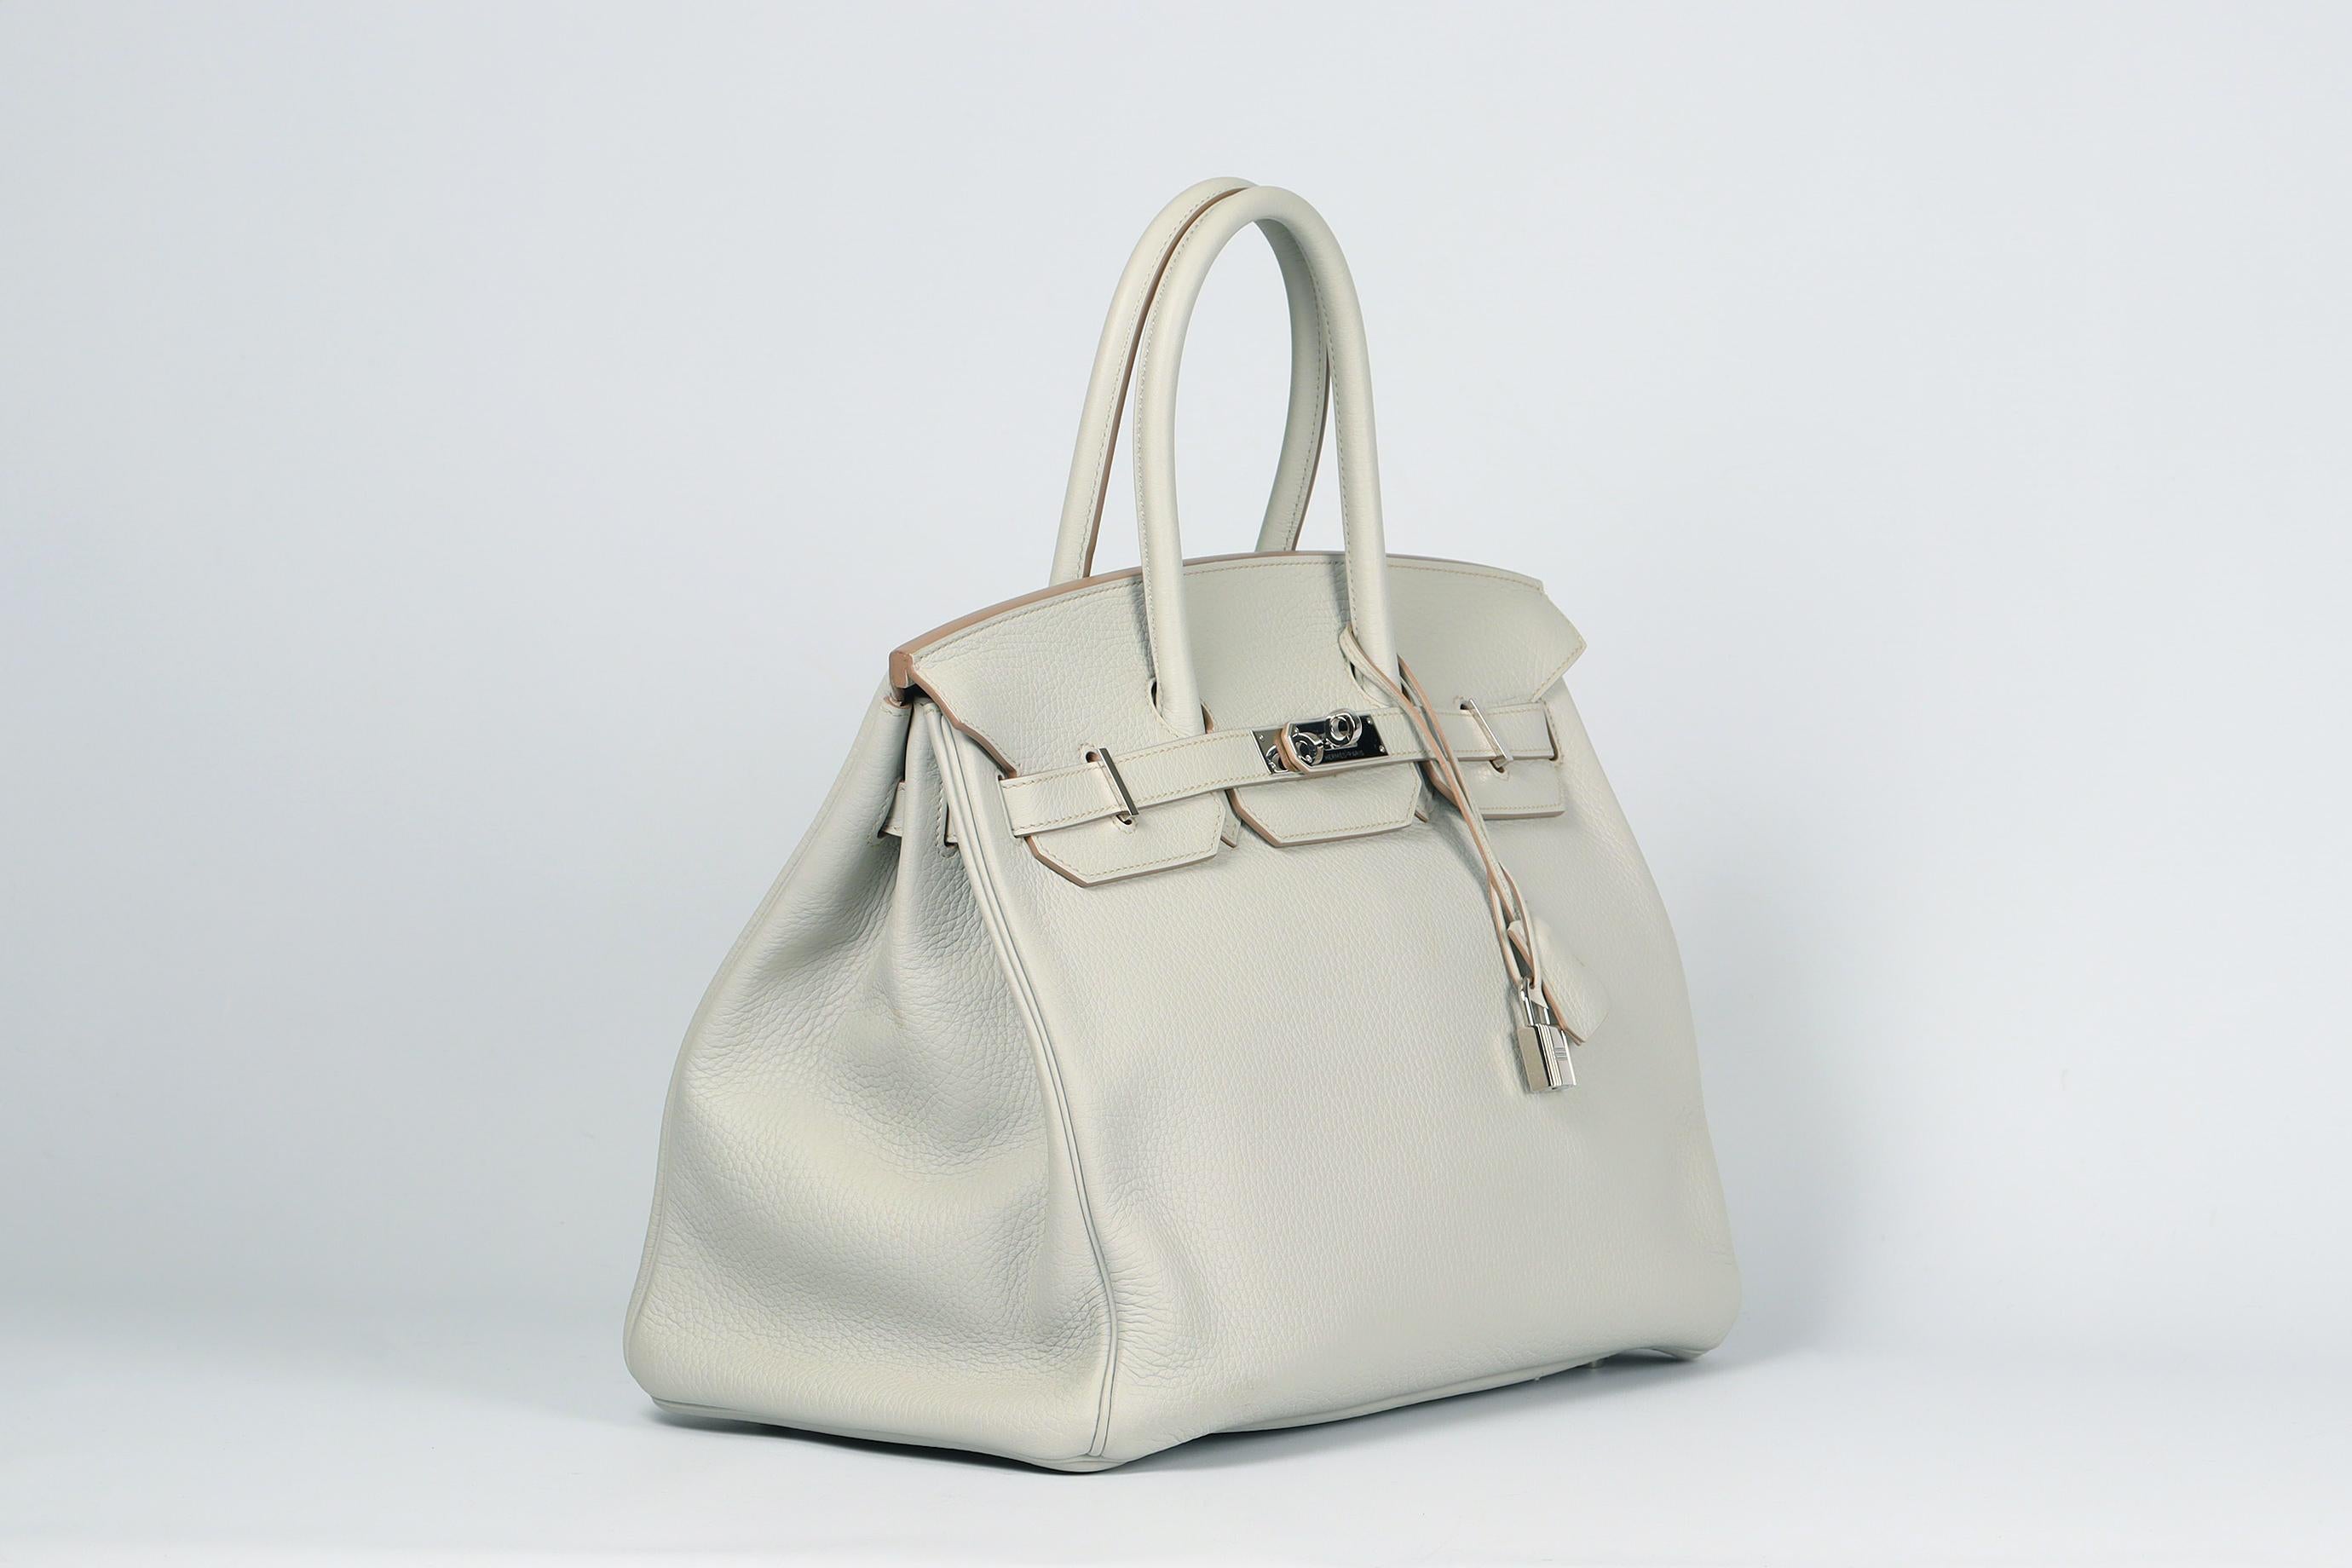 Hermès 2013 Birkin 35cm Togo Leather Bag For Sale 3